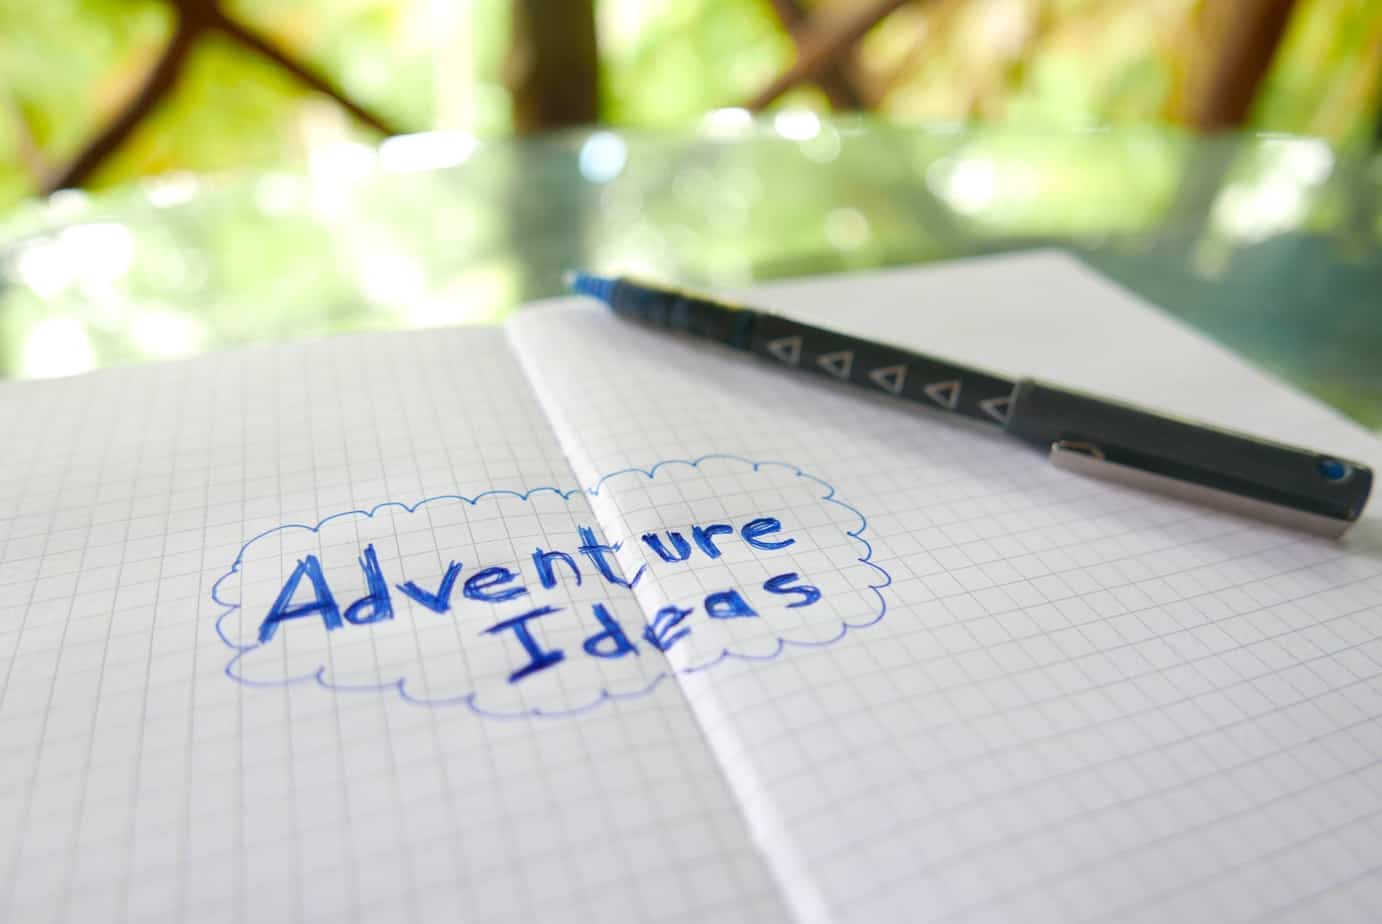 Adventure ideas